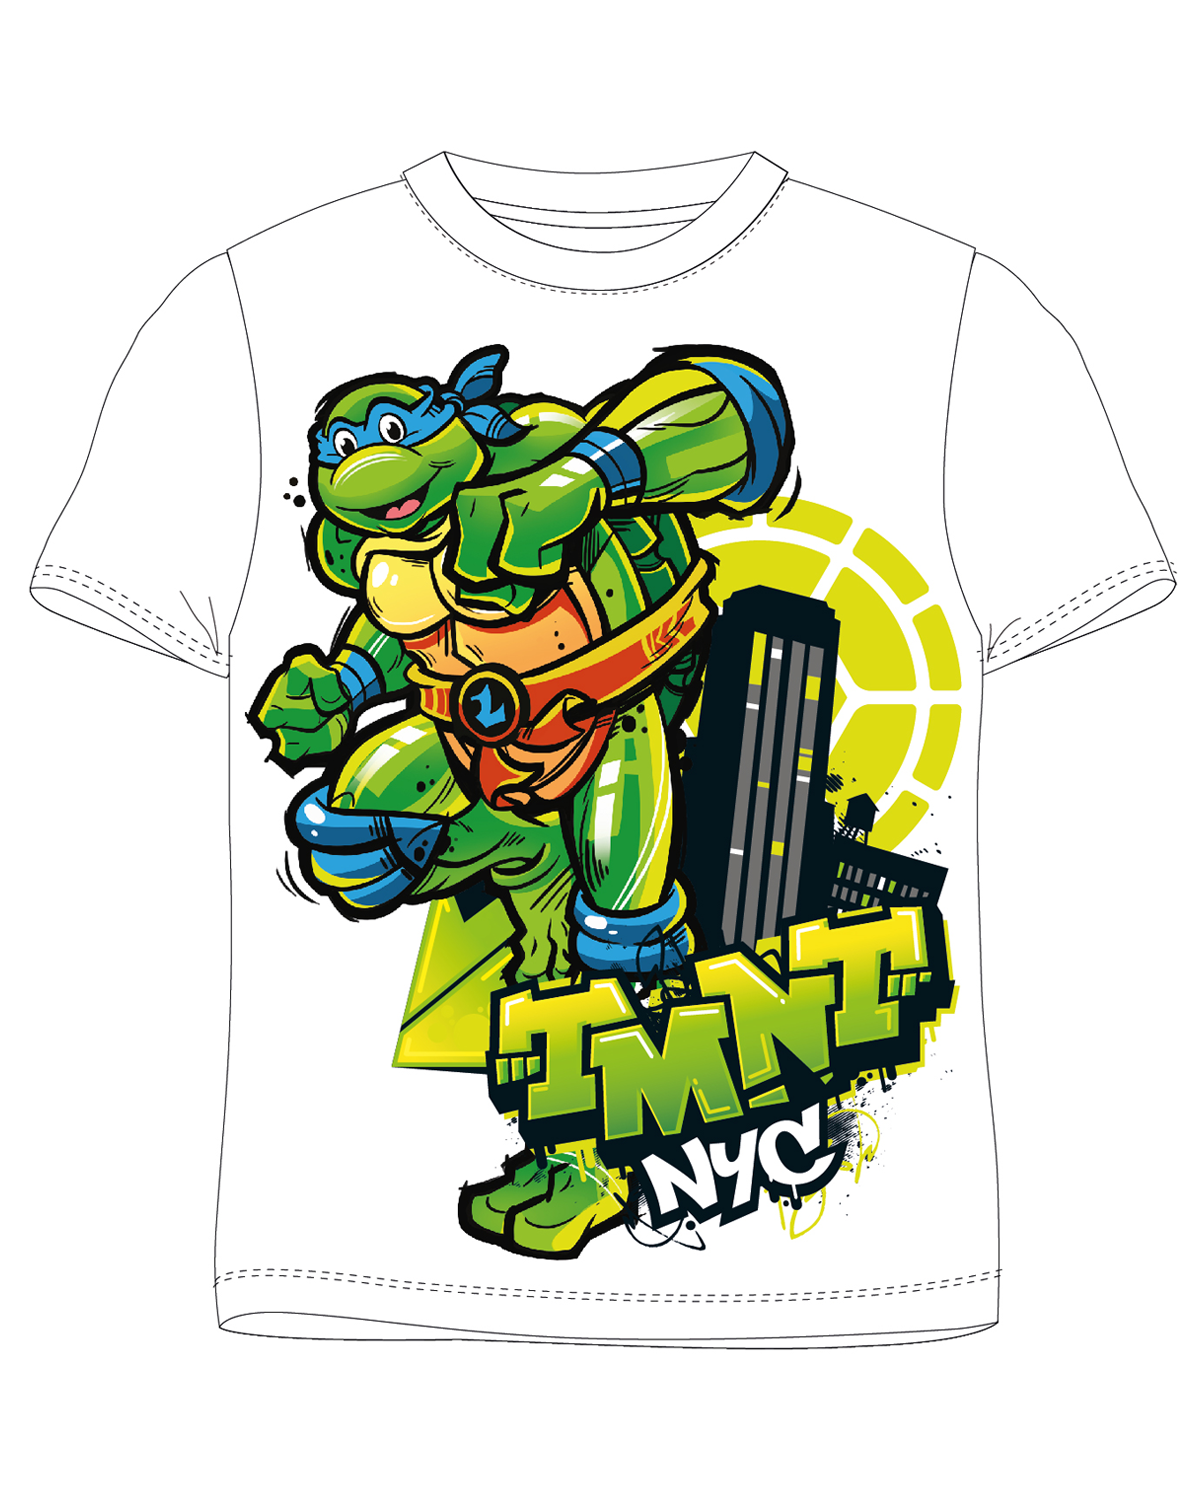 Želvy Ninja - licence Chlapecké tričko - Želvy Ninja 5202062, bílá Barva: Bílá, Velikost: 134